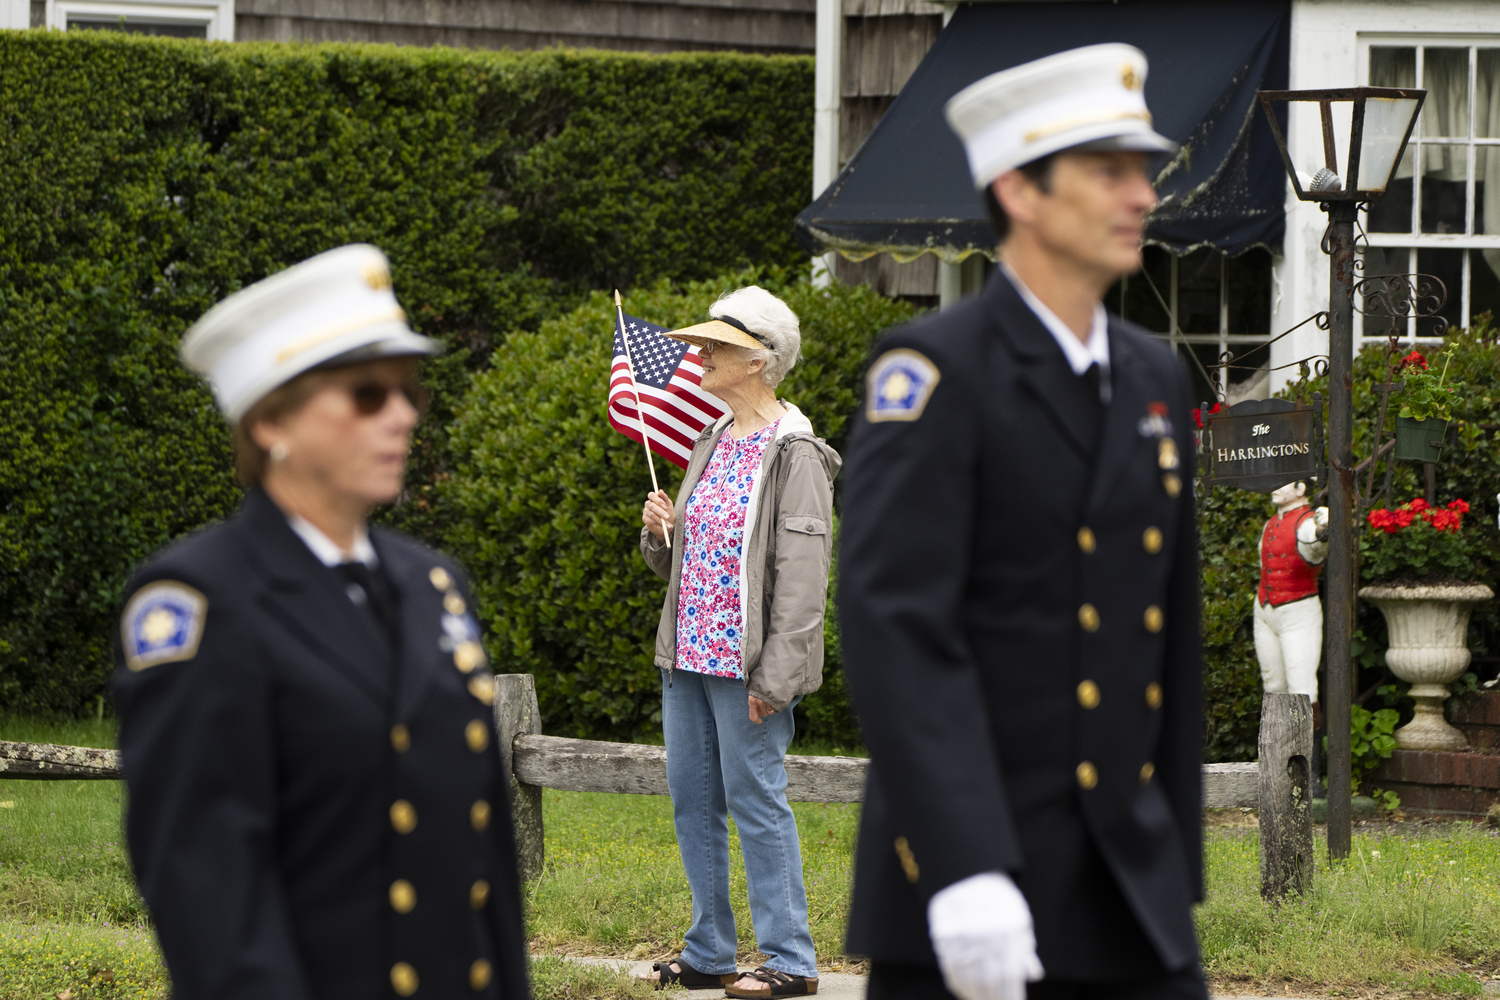 A woman watches the Sag Harbor Memorial Day Parade pass on Main Street. LORI HAWKINS